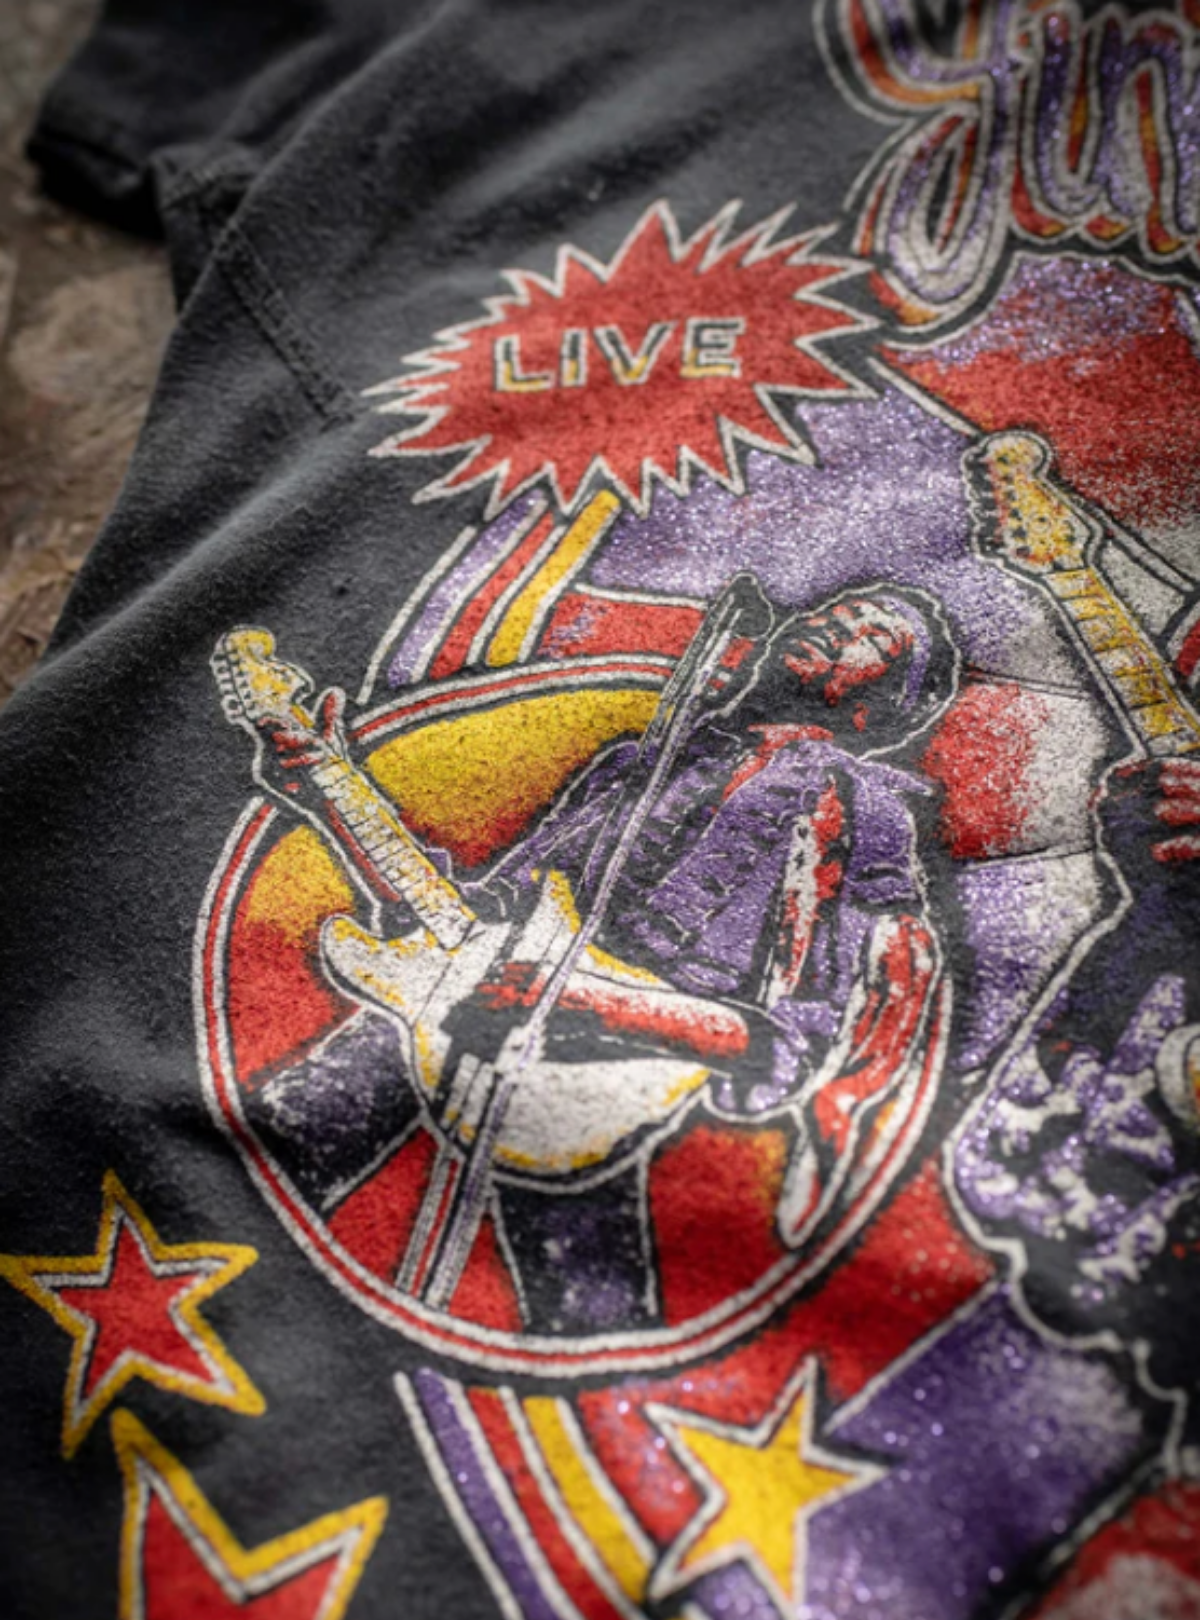 Jimi Hendrix x MadeWorn American Tour Black T-Shirt